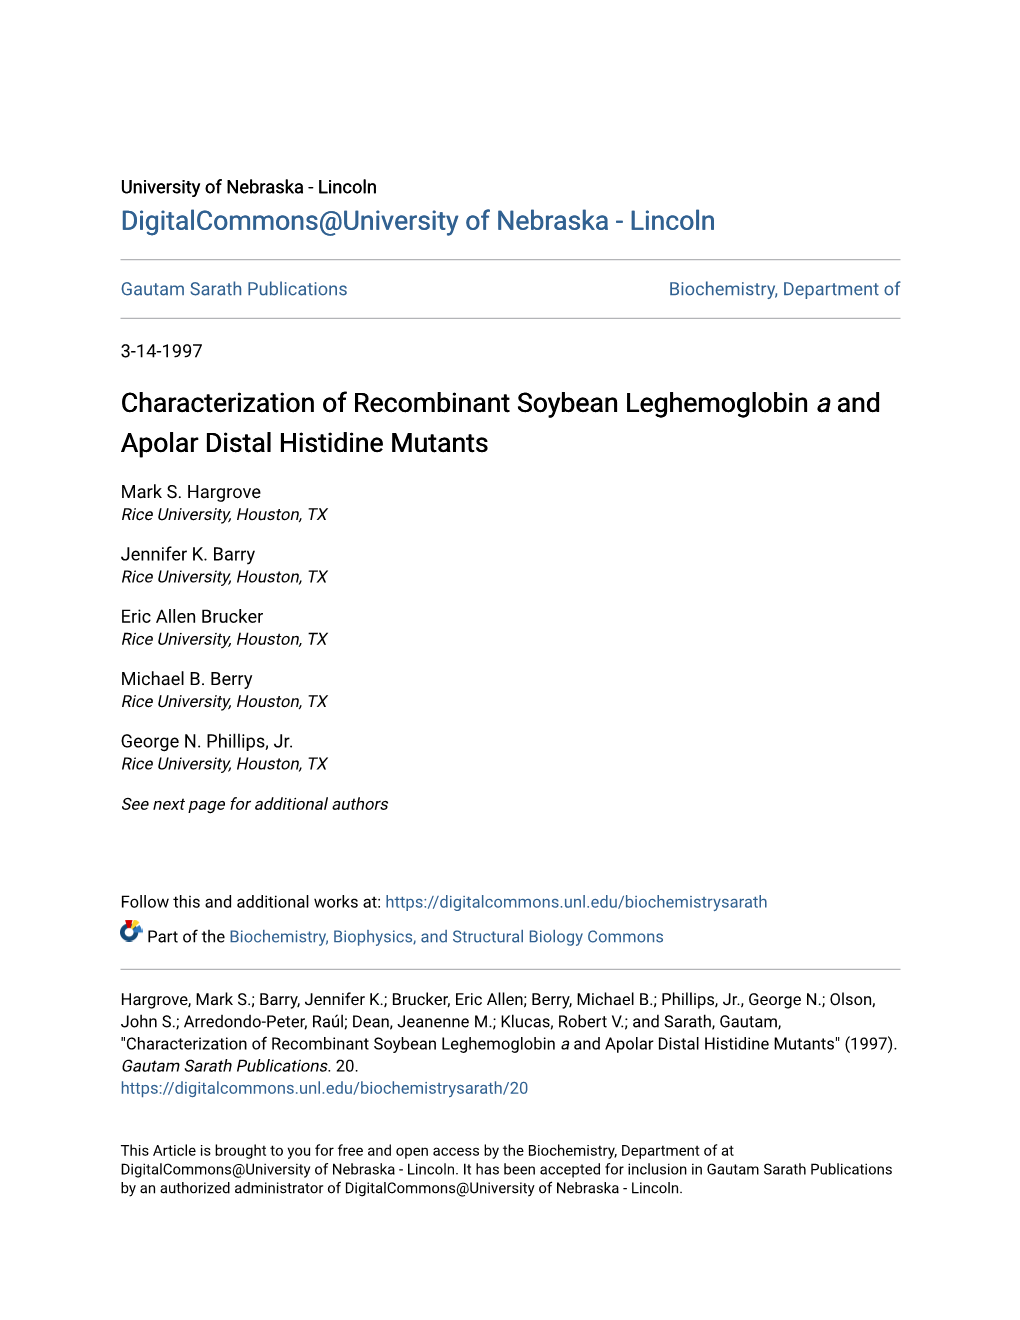 Characterization of Recombinant Soybean Leghemoglobin a and Apolar Distal Histidine Mutants